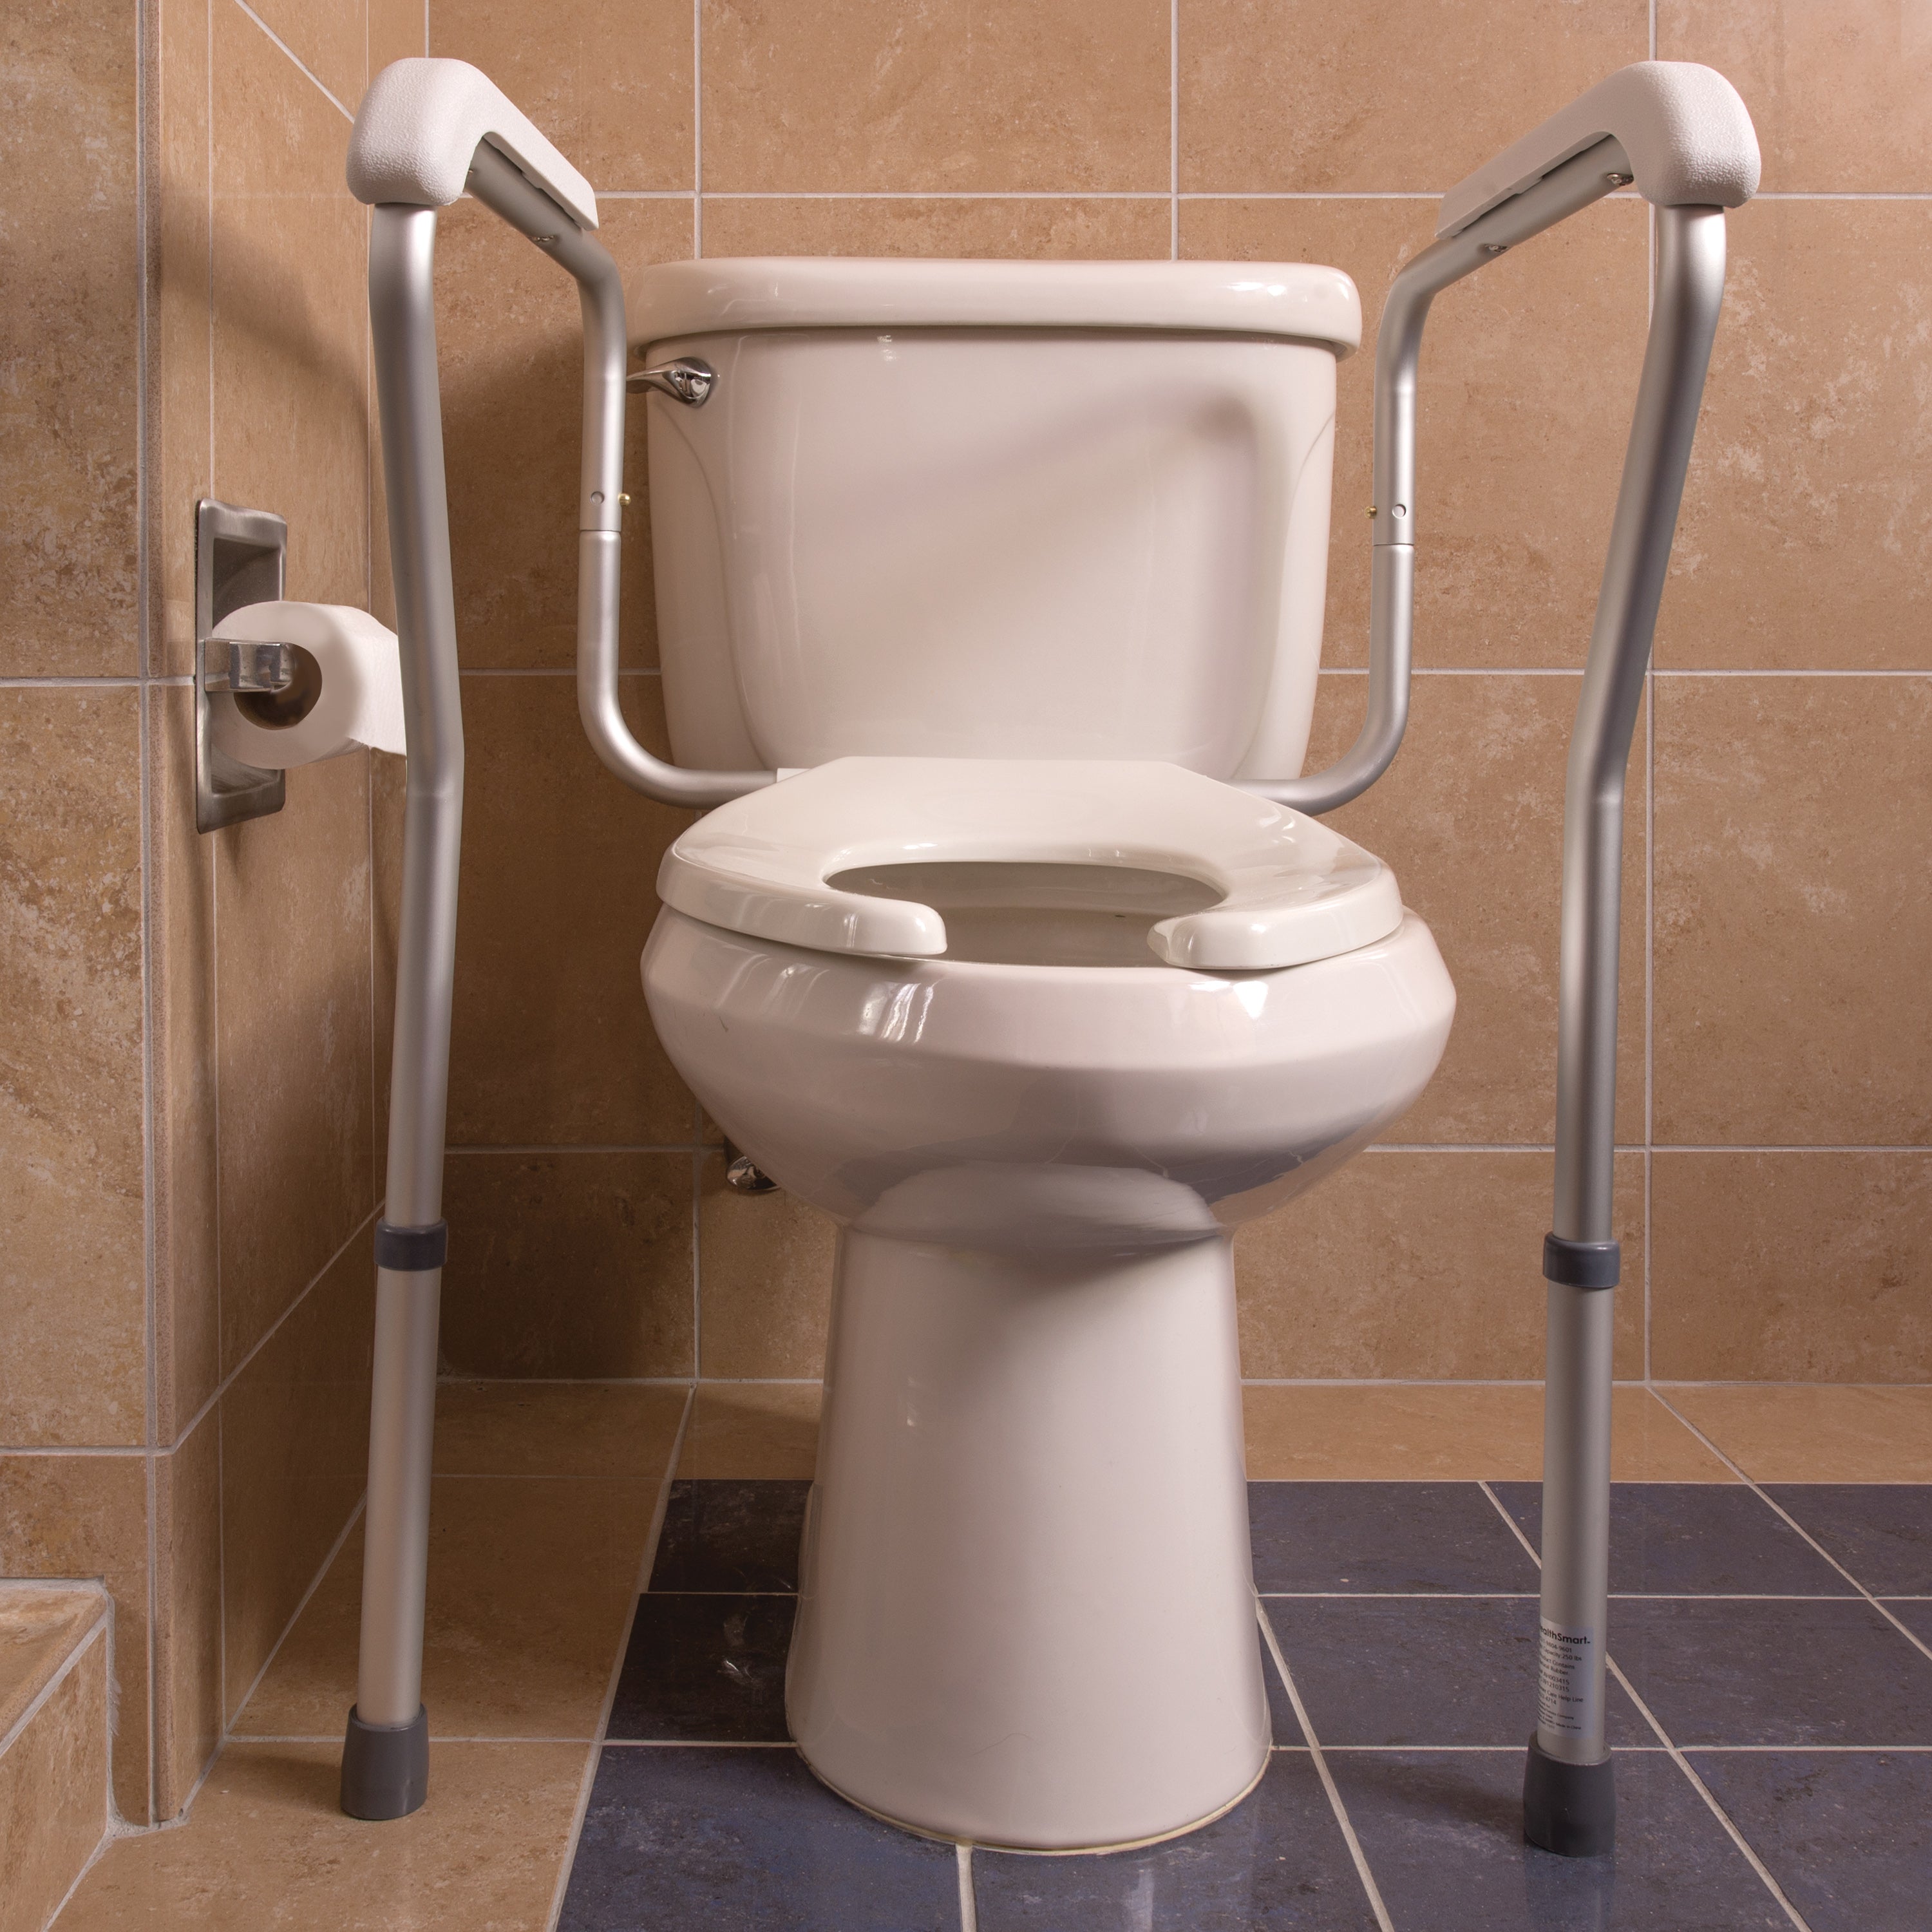 HealthSmart Germ-Free Toilet Rails Safety Arms AM-521-9804-9601